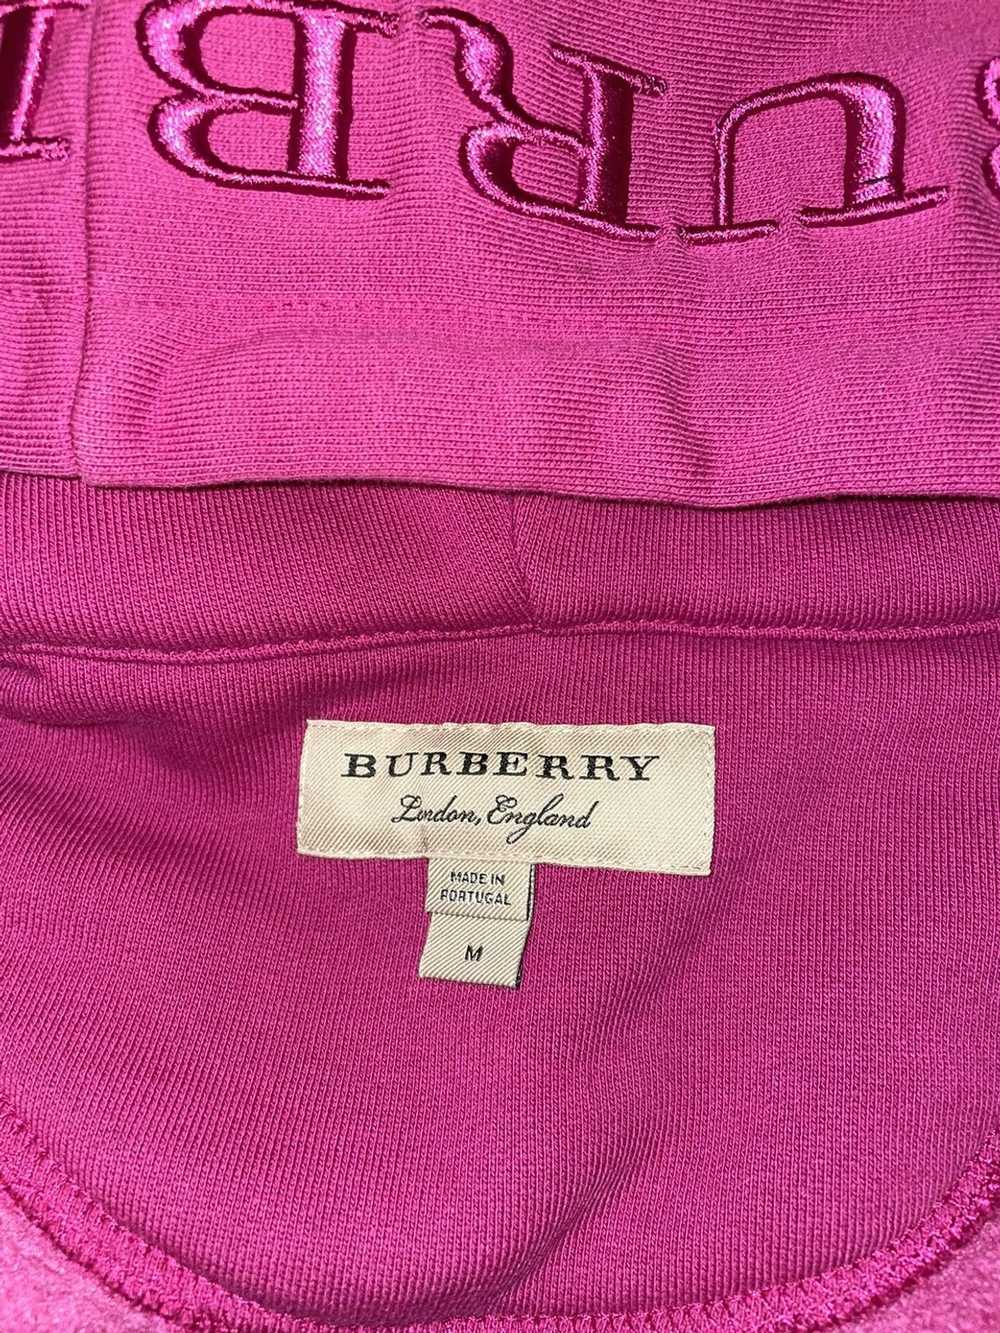 Burberry Burberry hoodie - image 3